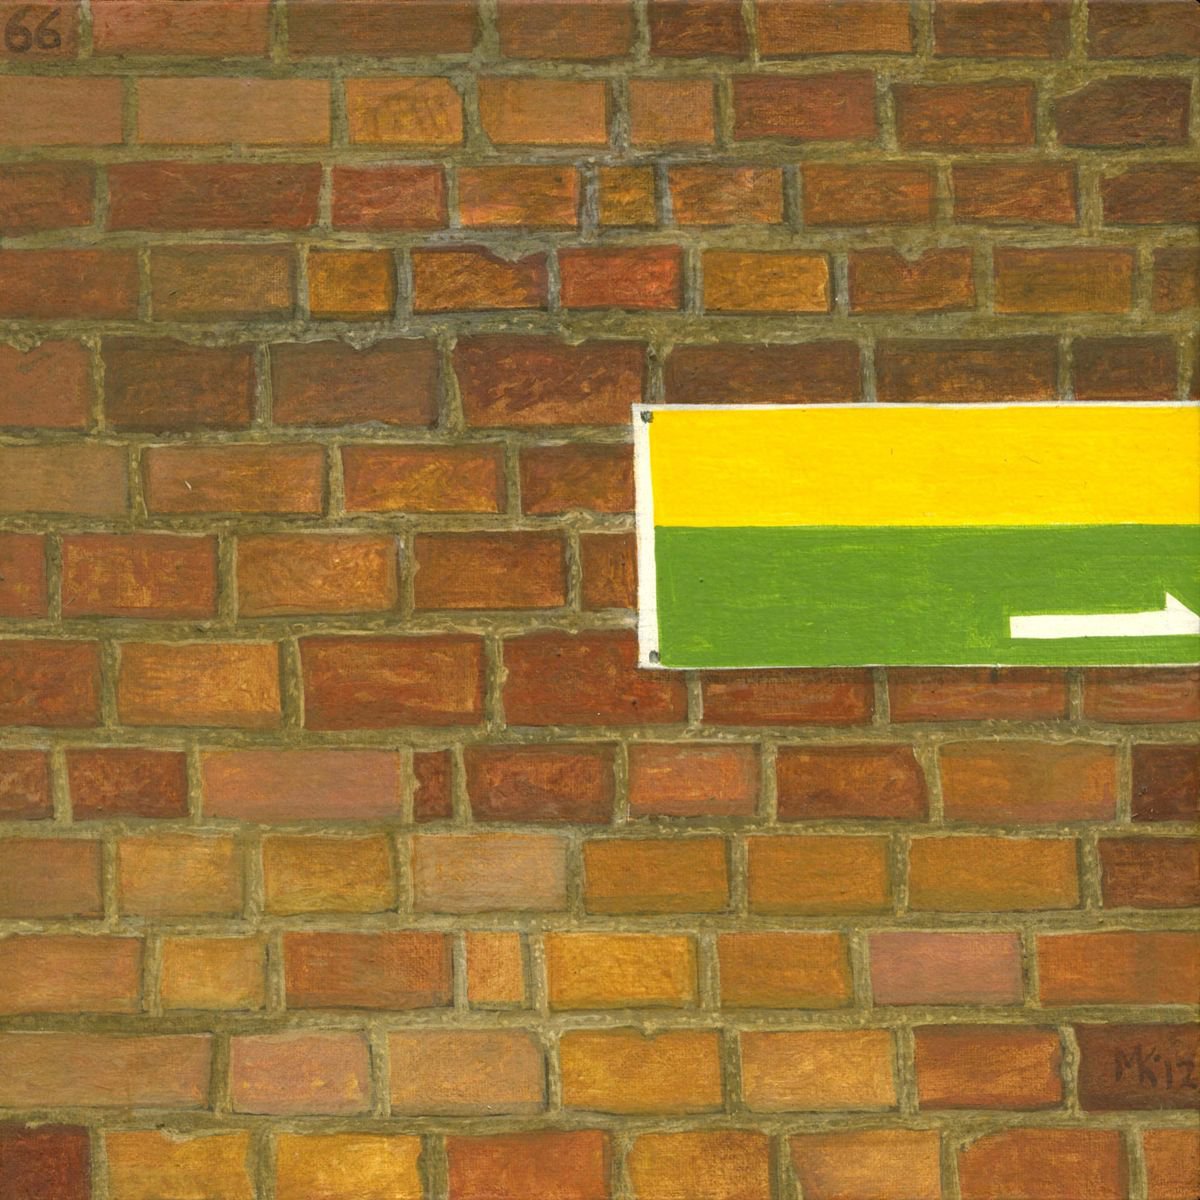 Day 66, London wall by Markos Kampanis